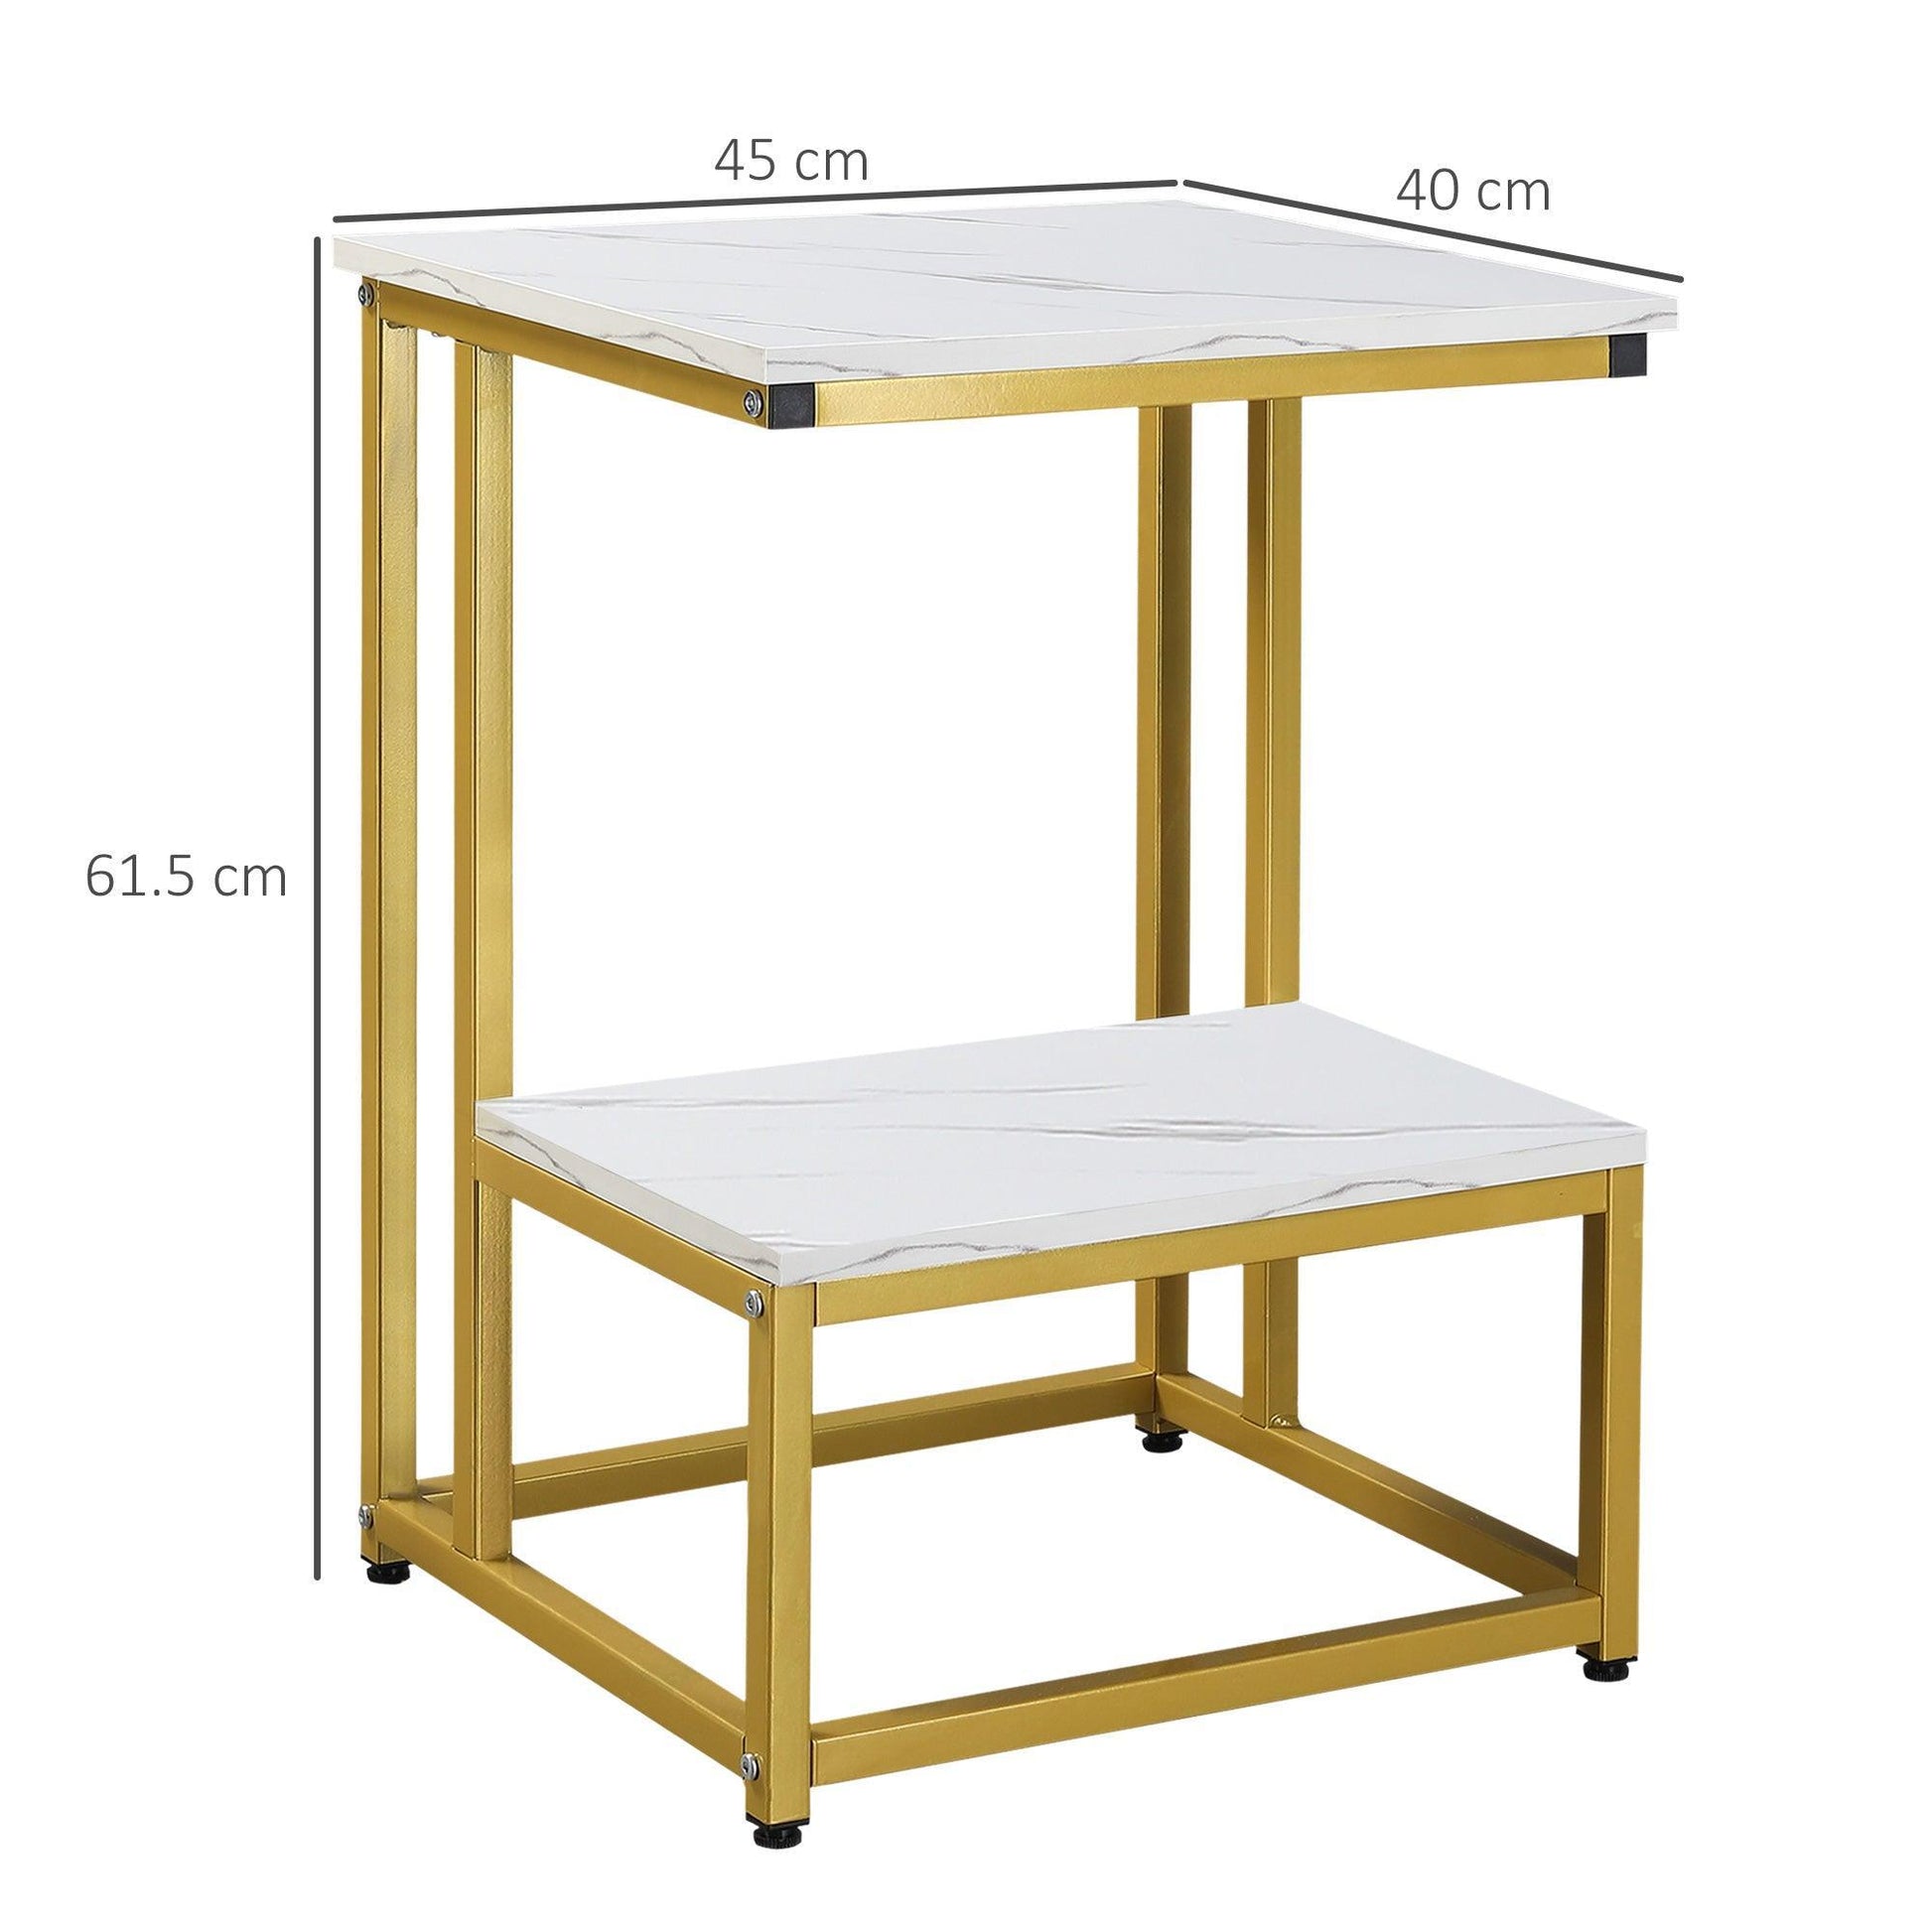 HOMCOM Modern White Side Table with Steel Frame and Adjustable Feet - ALL4U RETAILER LTD